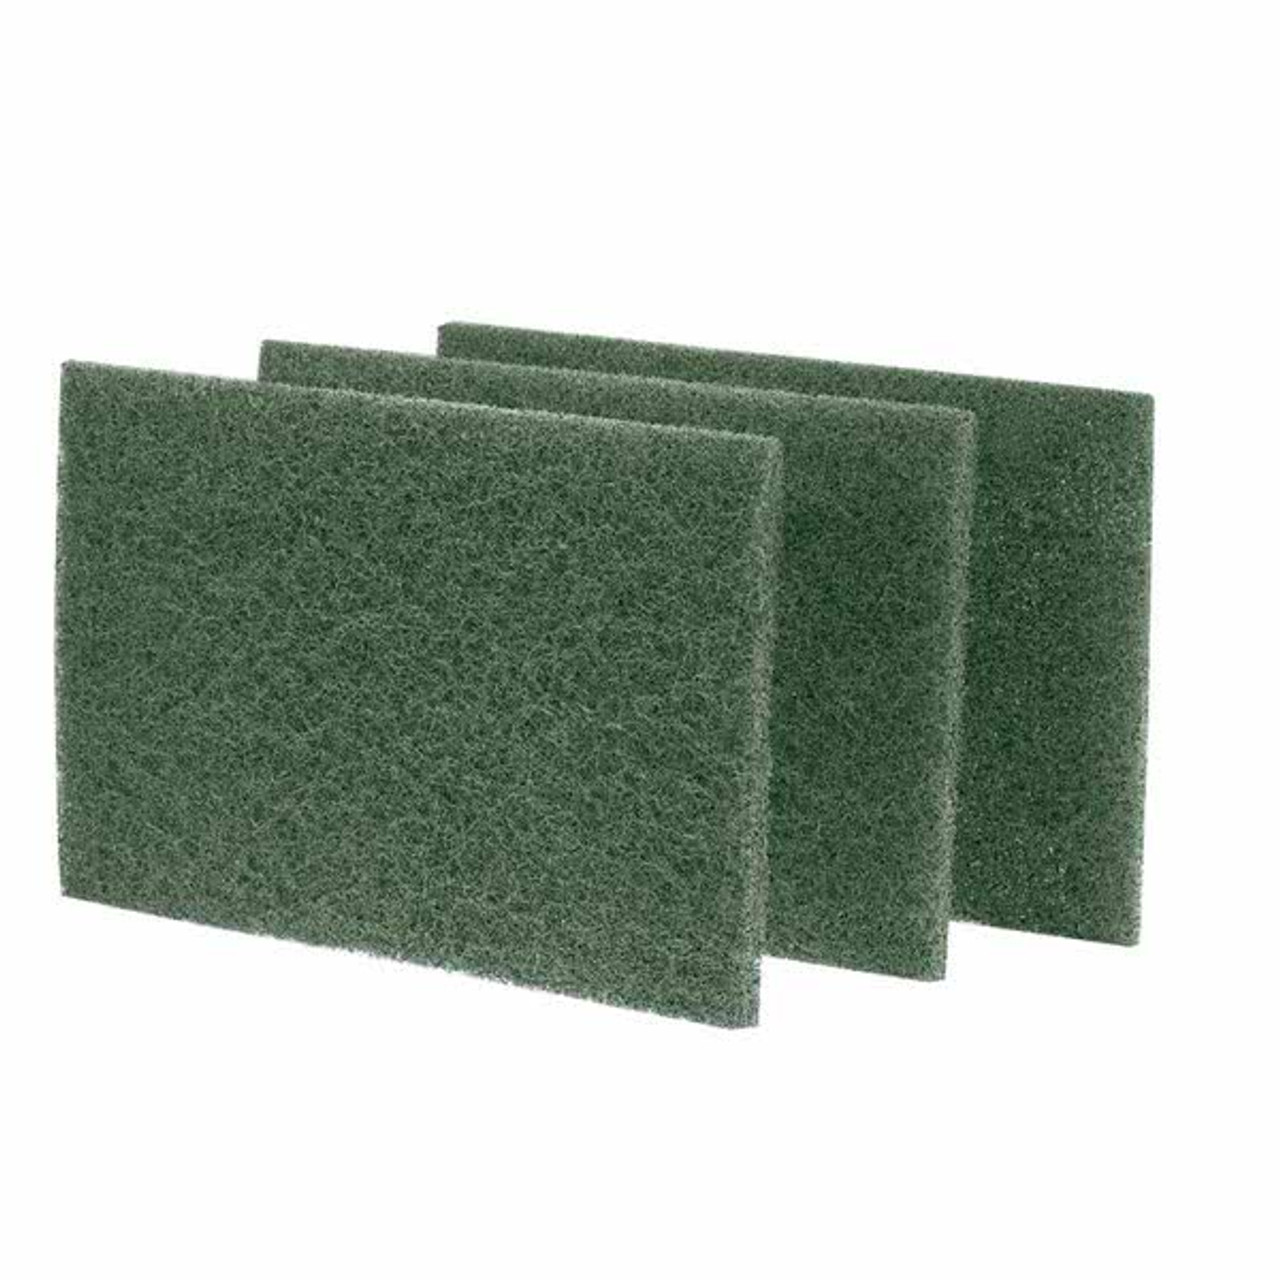 9" x 6" Dark Green Scouring Pad - 10/Pack-S960 